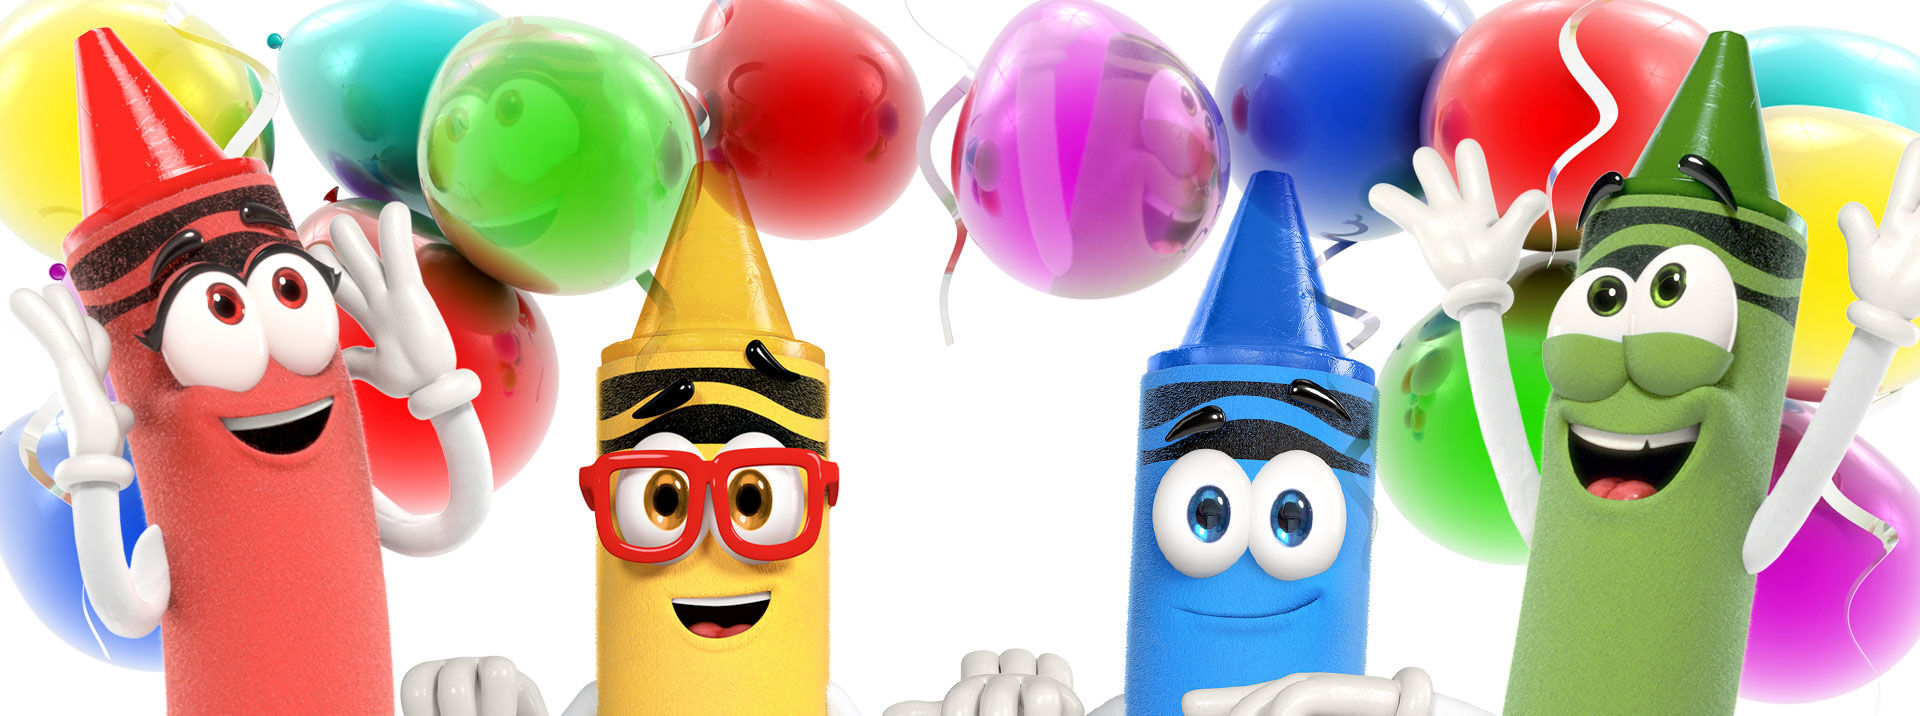 Download Kids Party Favors & Party Activities | Crayola.com | Crayola